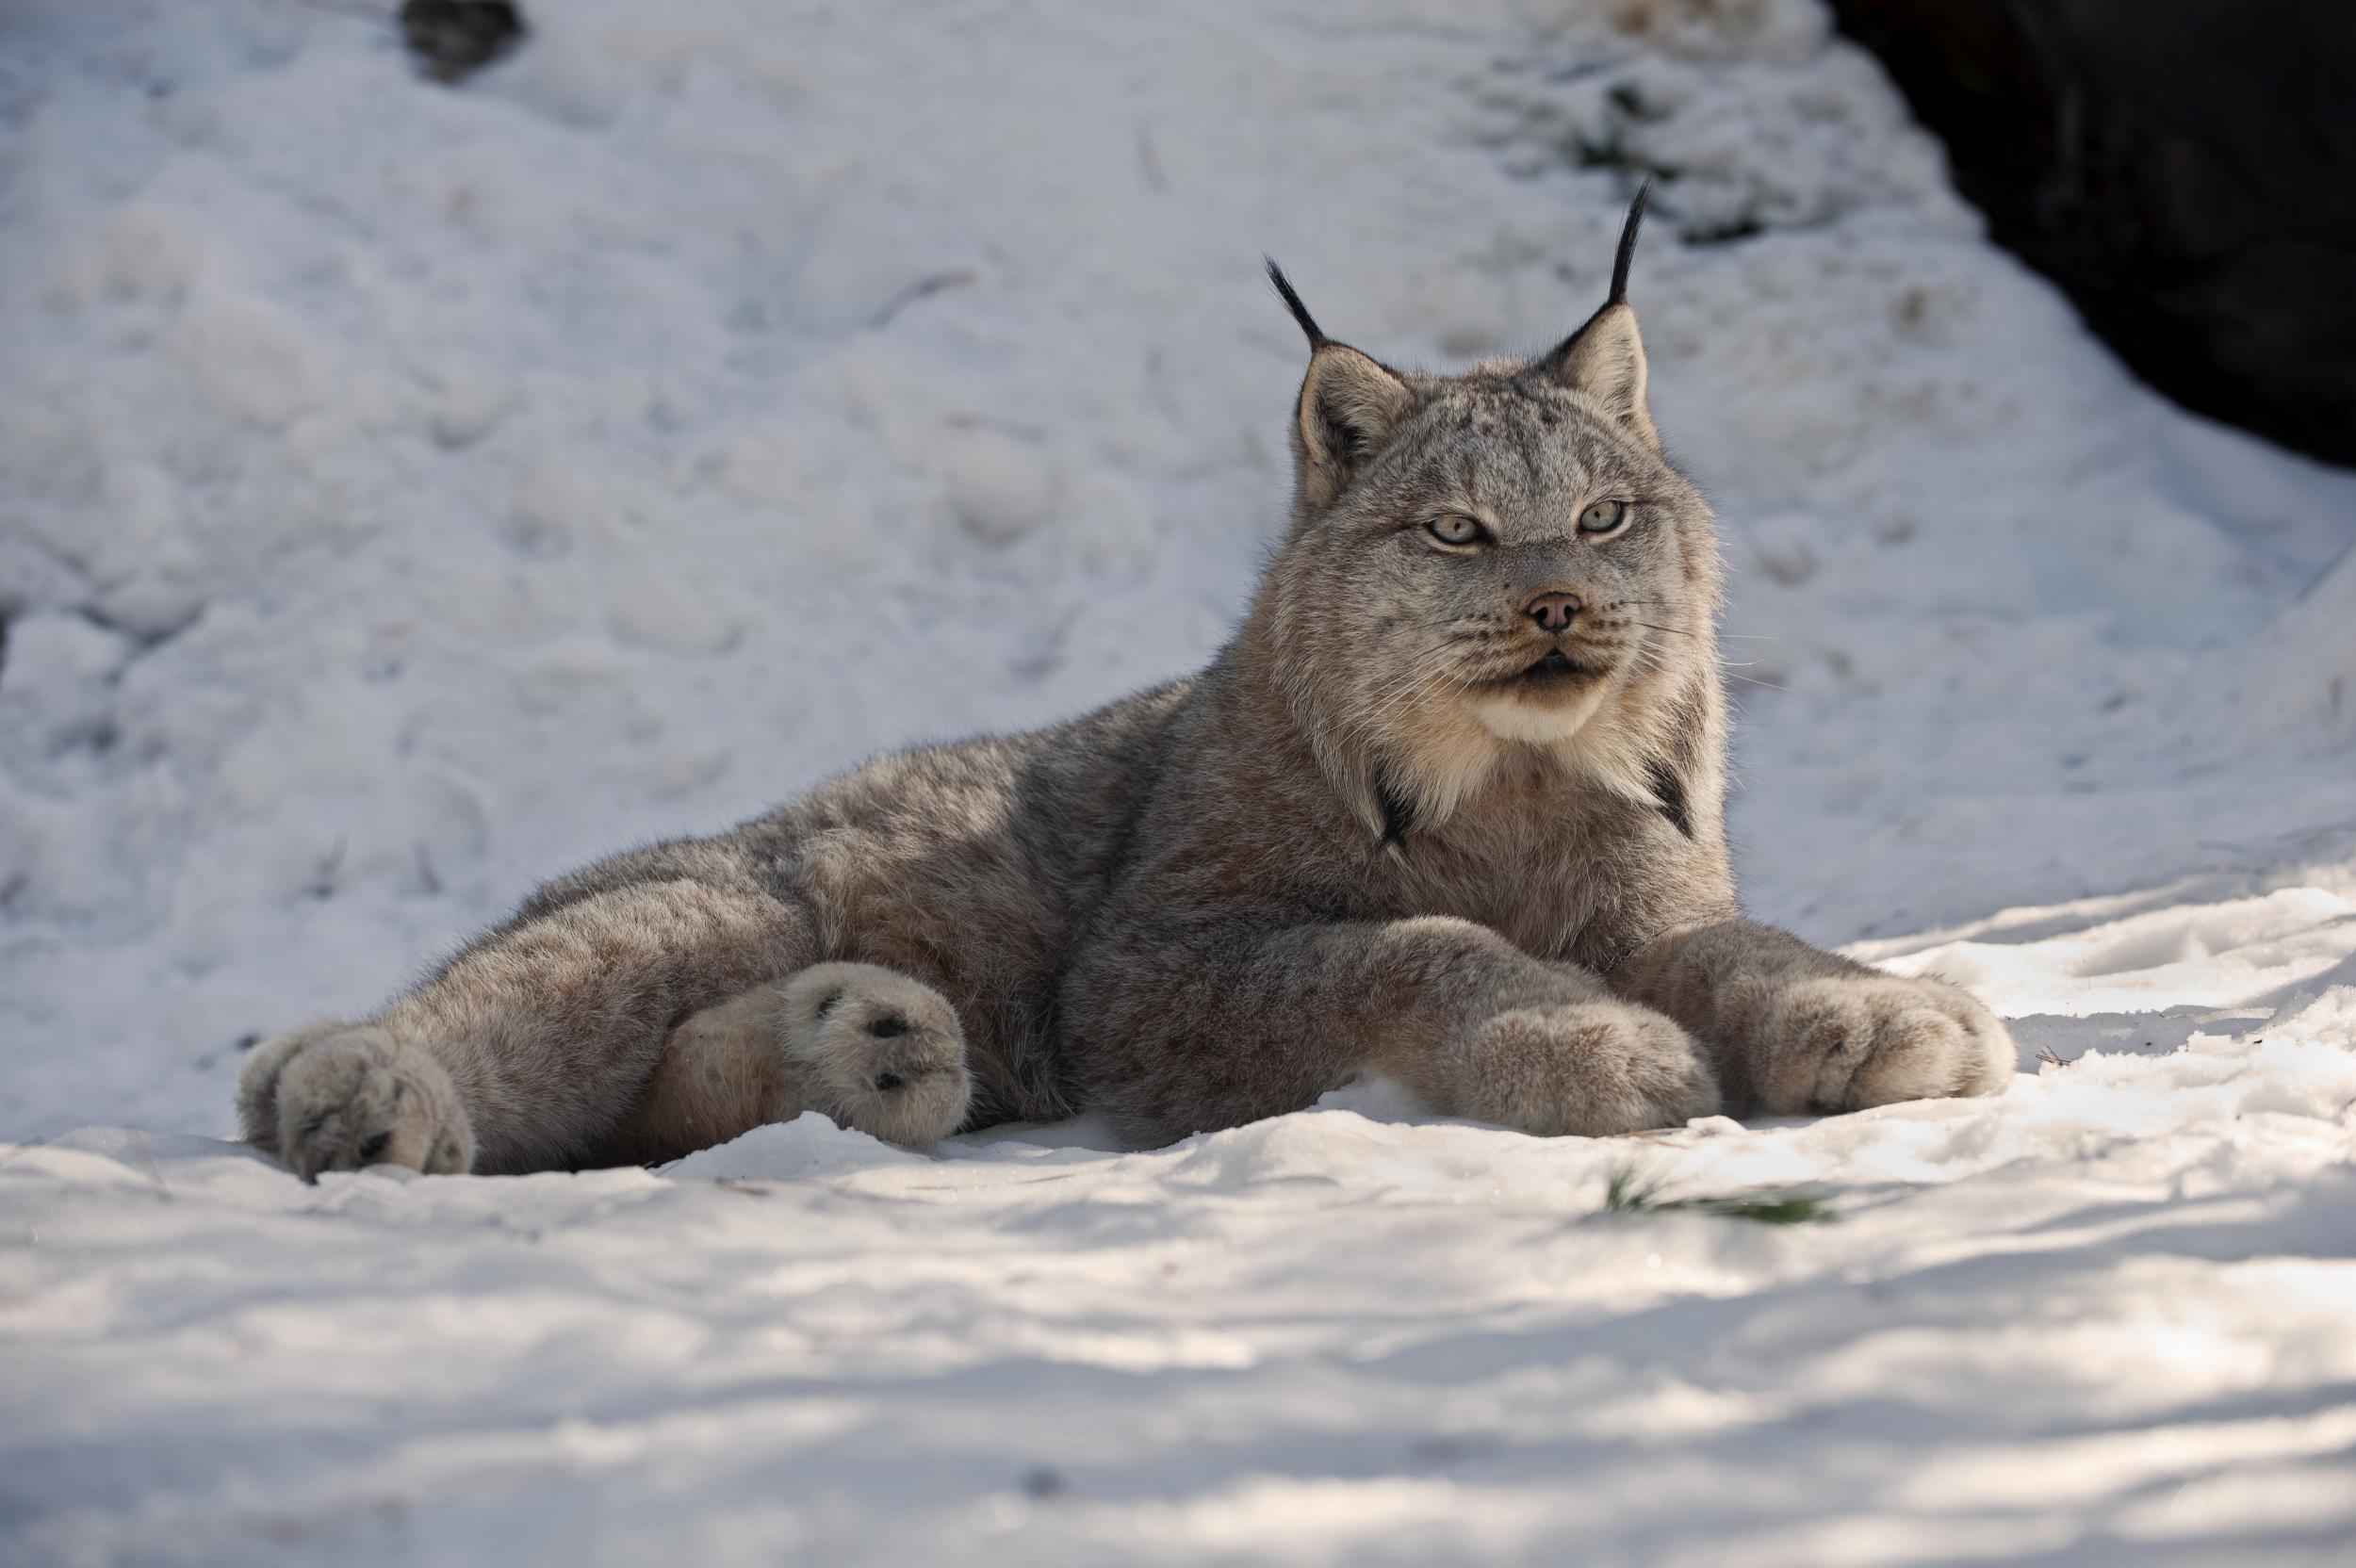 &#13;
Forest fires have endangered lynx further &#13;